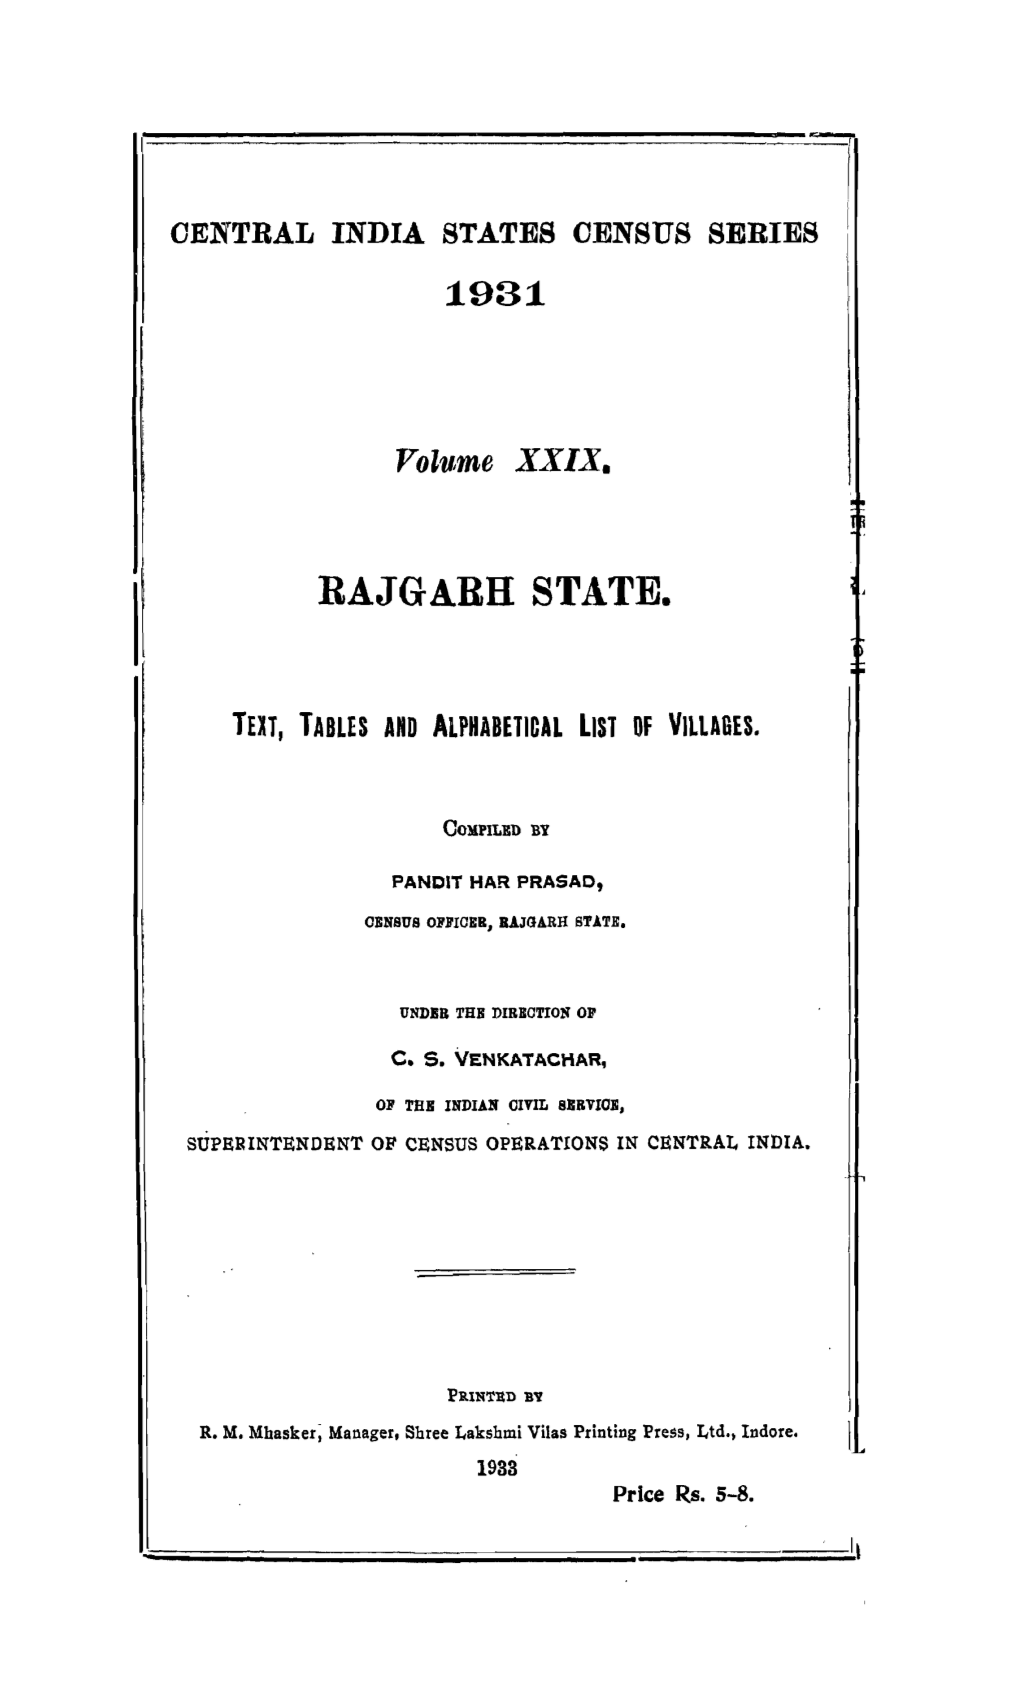 Central India States Census Series, Rajgarh State, Madhya Pradesh